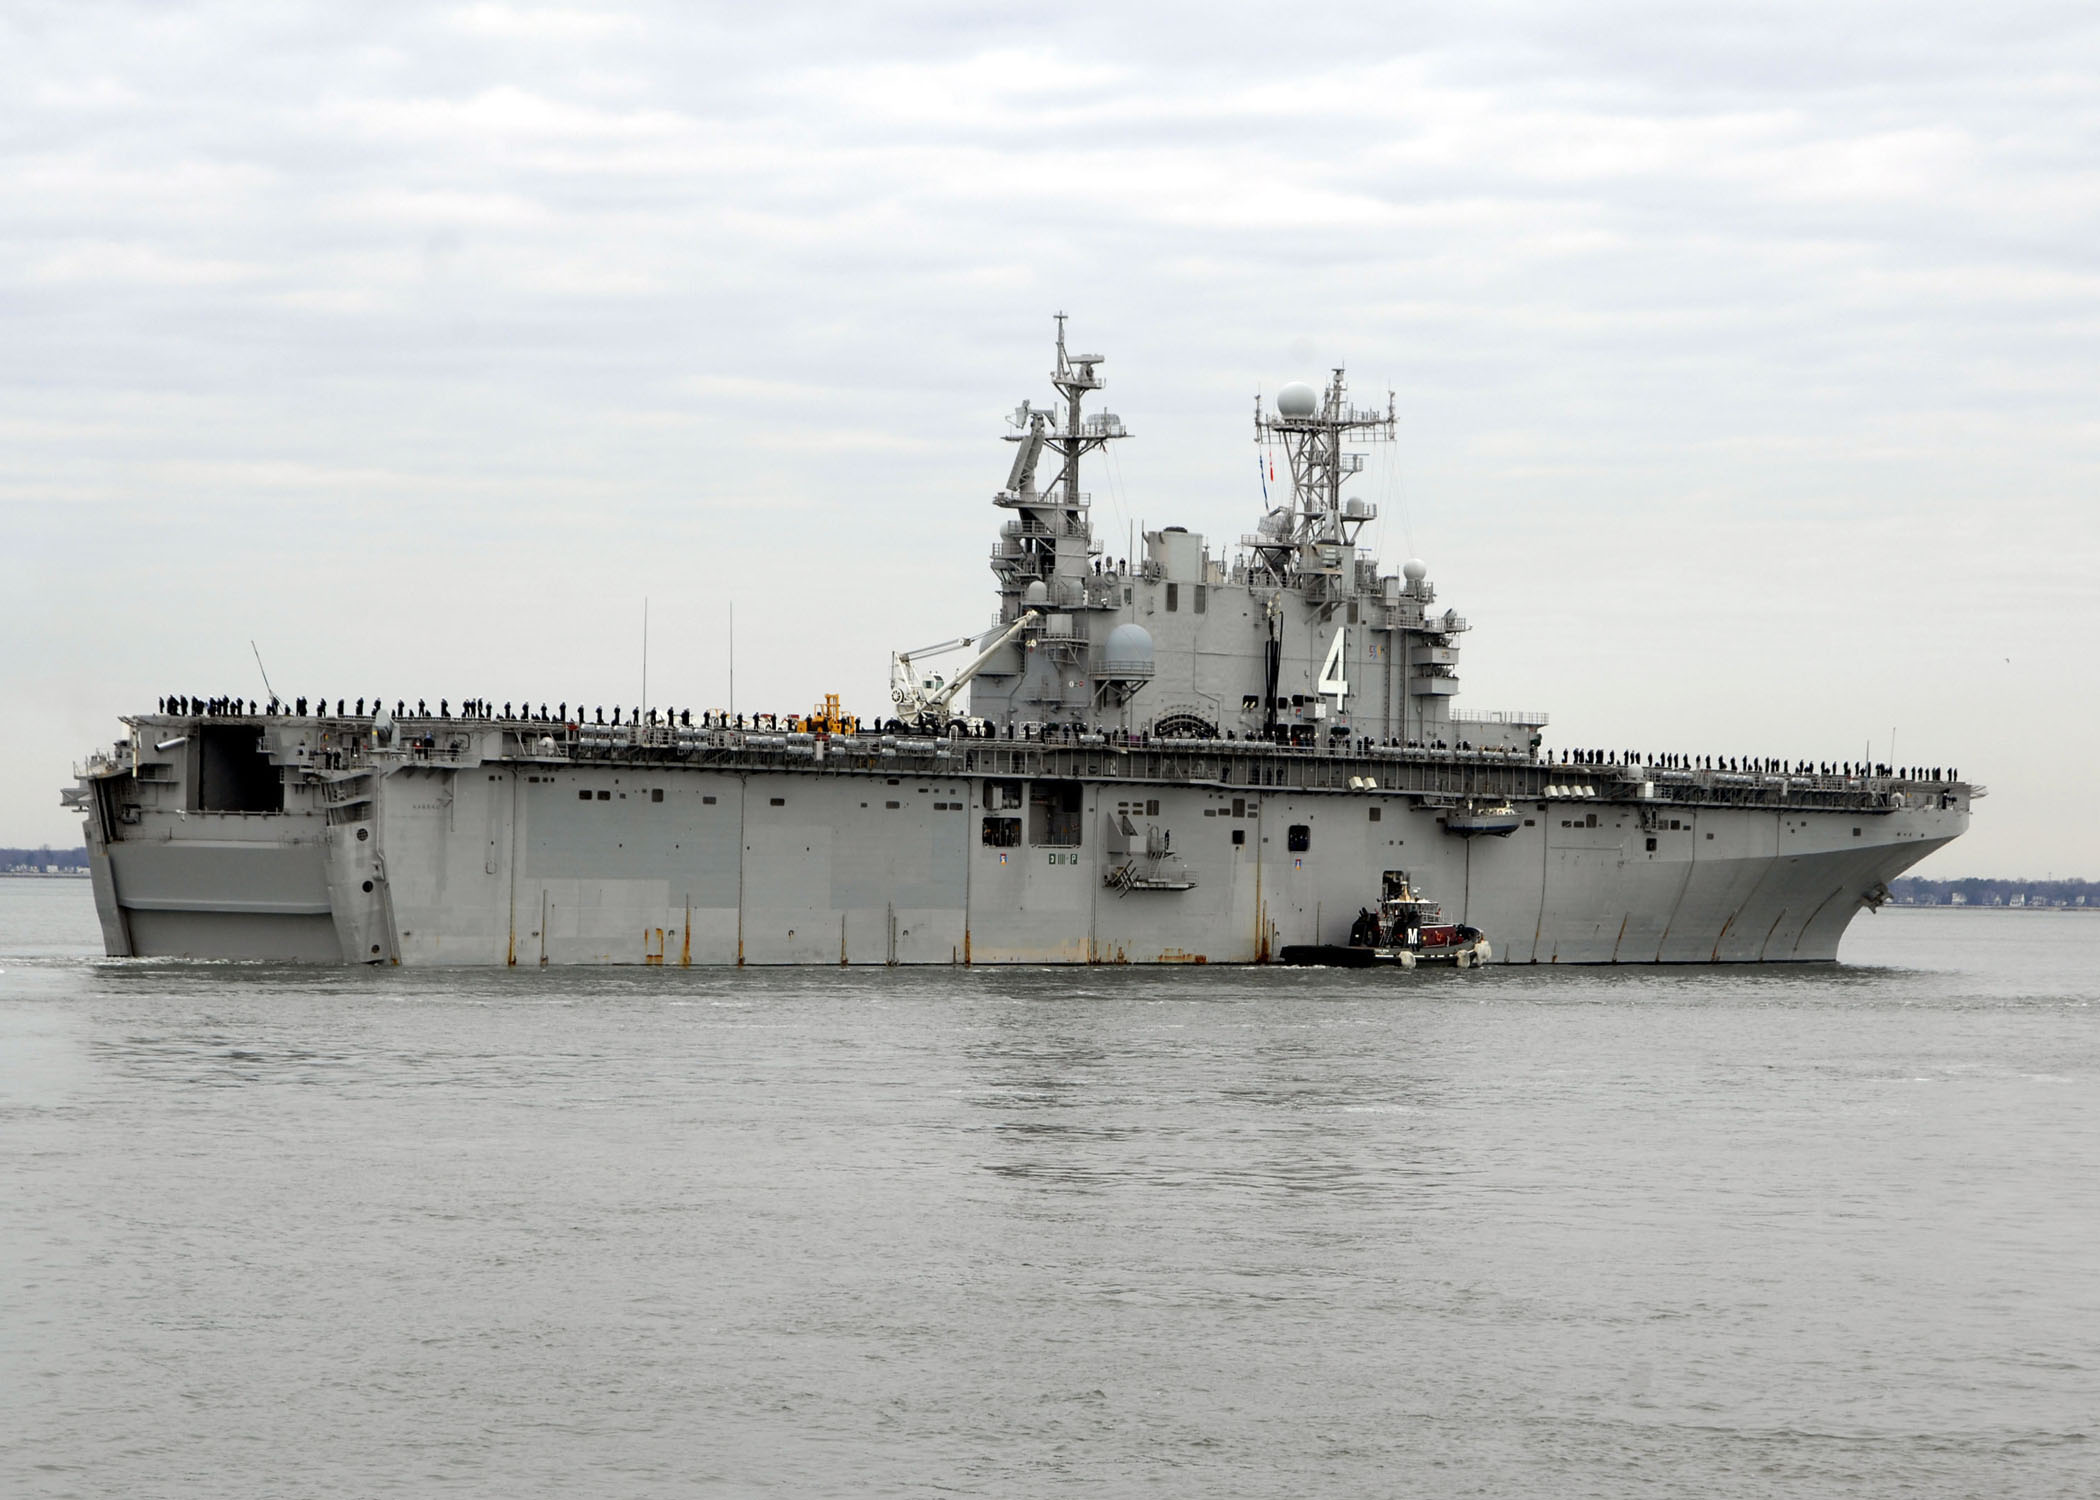 US_Navy_080220-N-5292M-007_The_amphibious_assault_ship_USS_Nassau_(LHA_4)_departs_the_pier_for_a_six-month_deployment.jpg